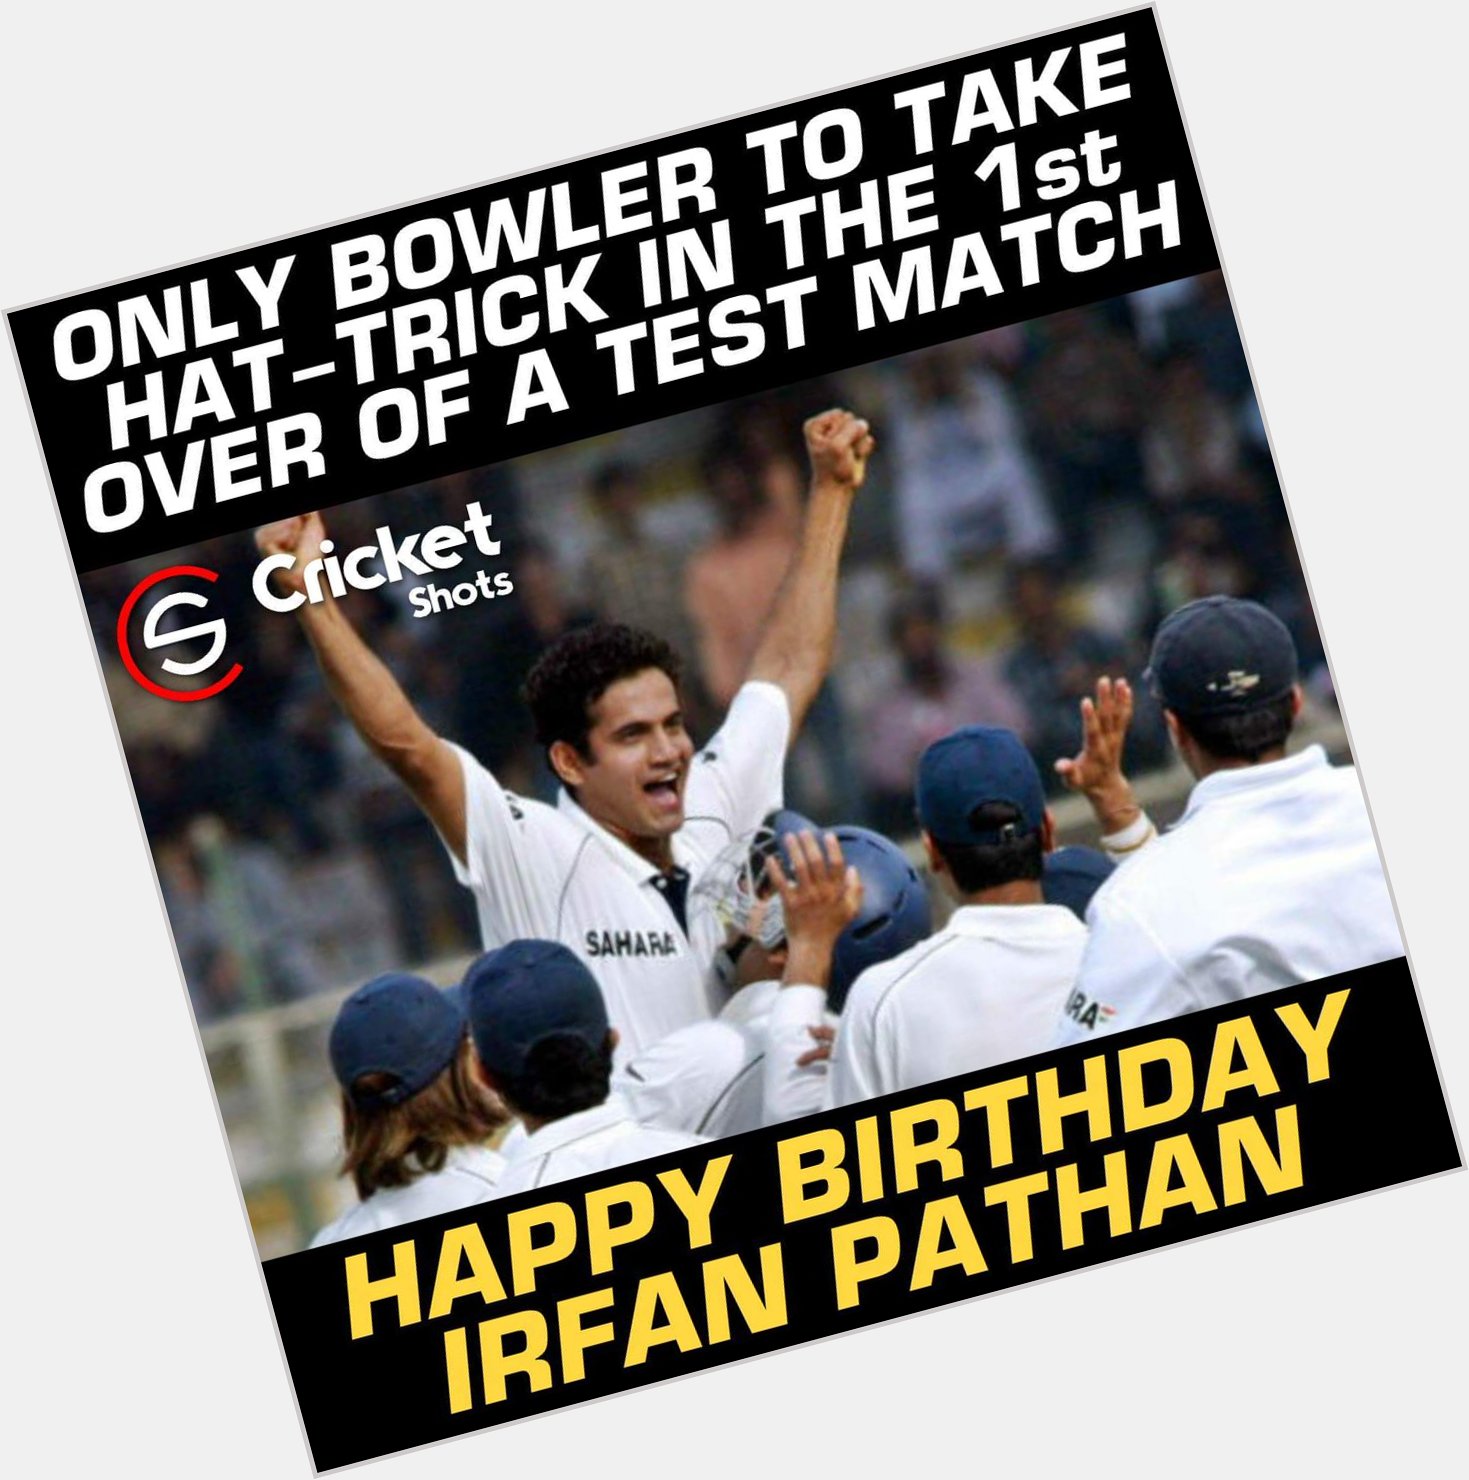 Happy Birthday, Irfan Pathan!! 